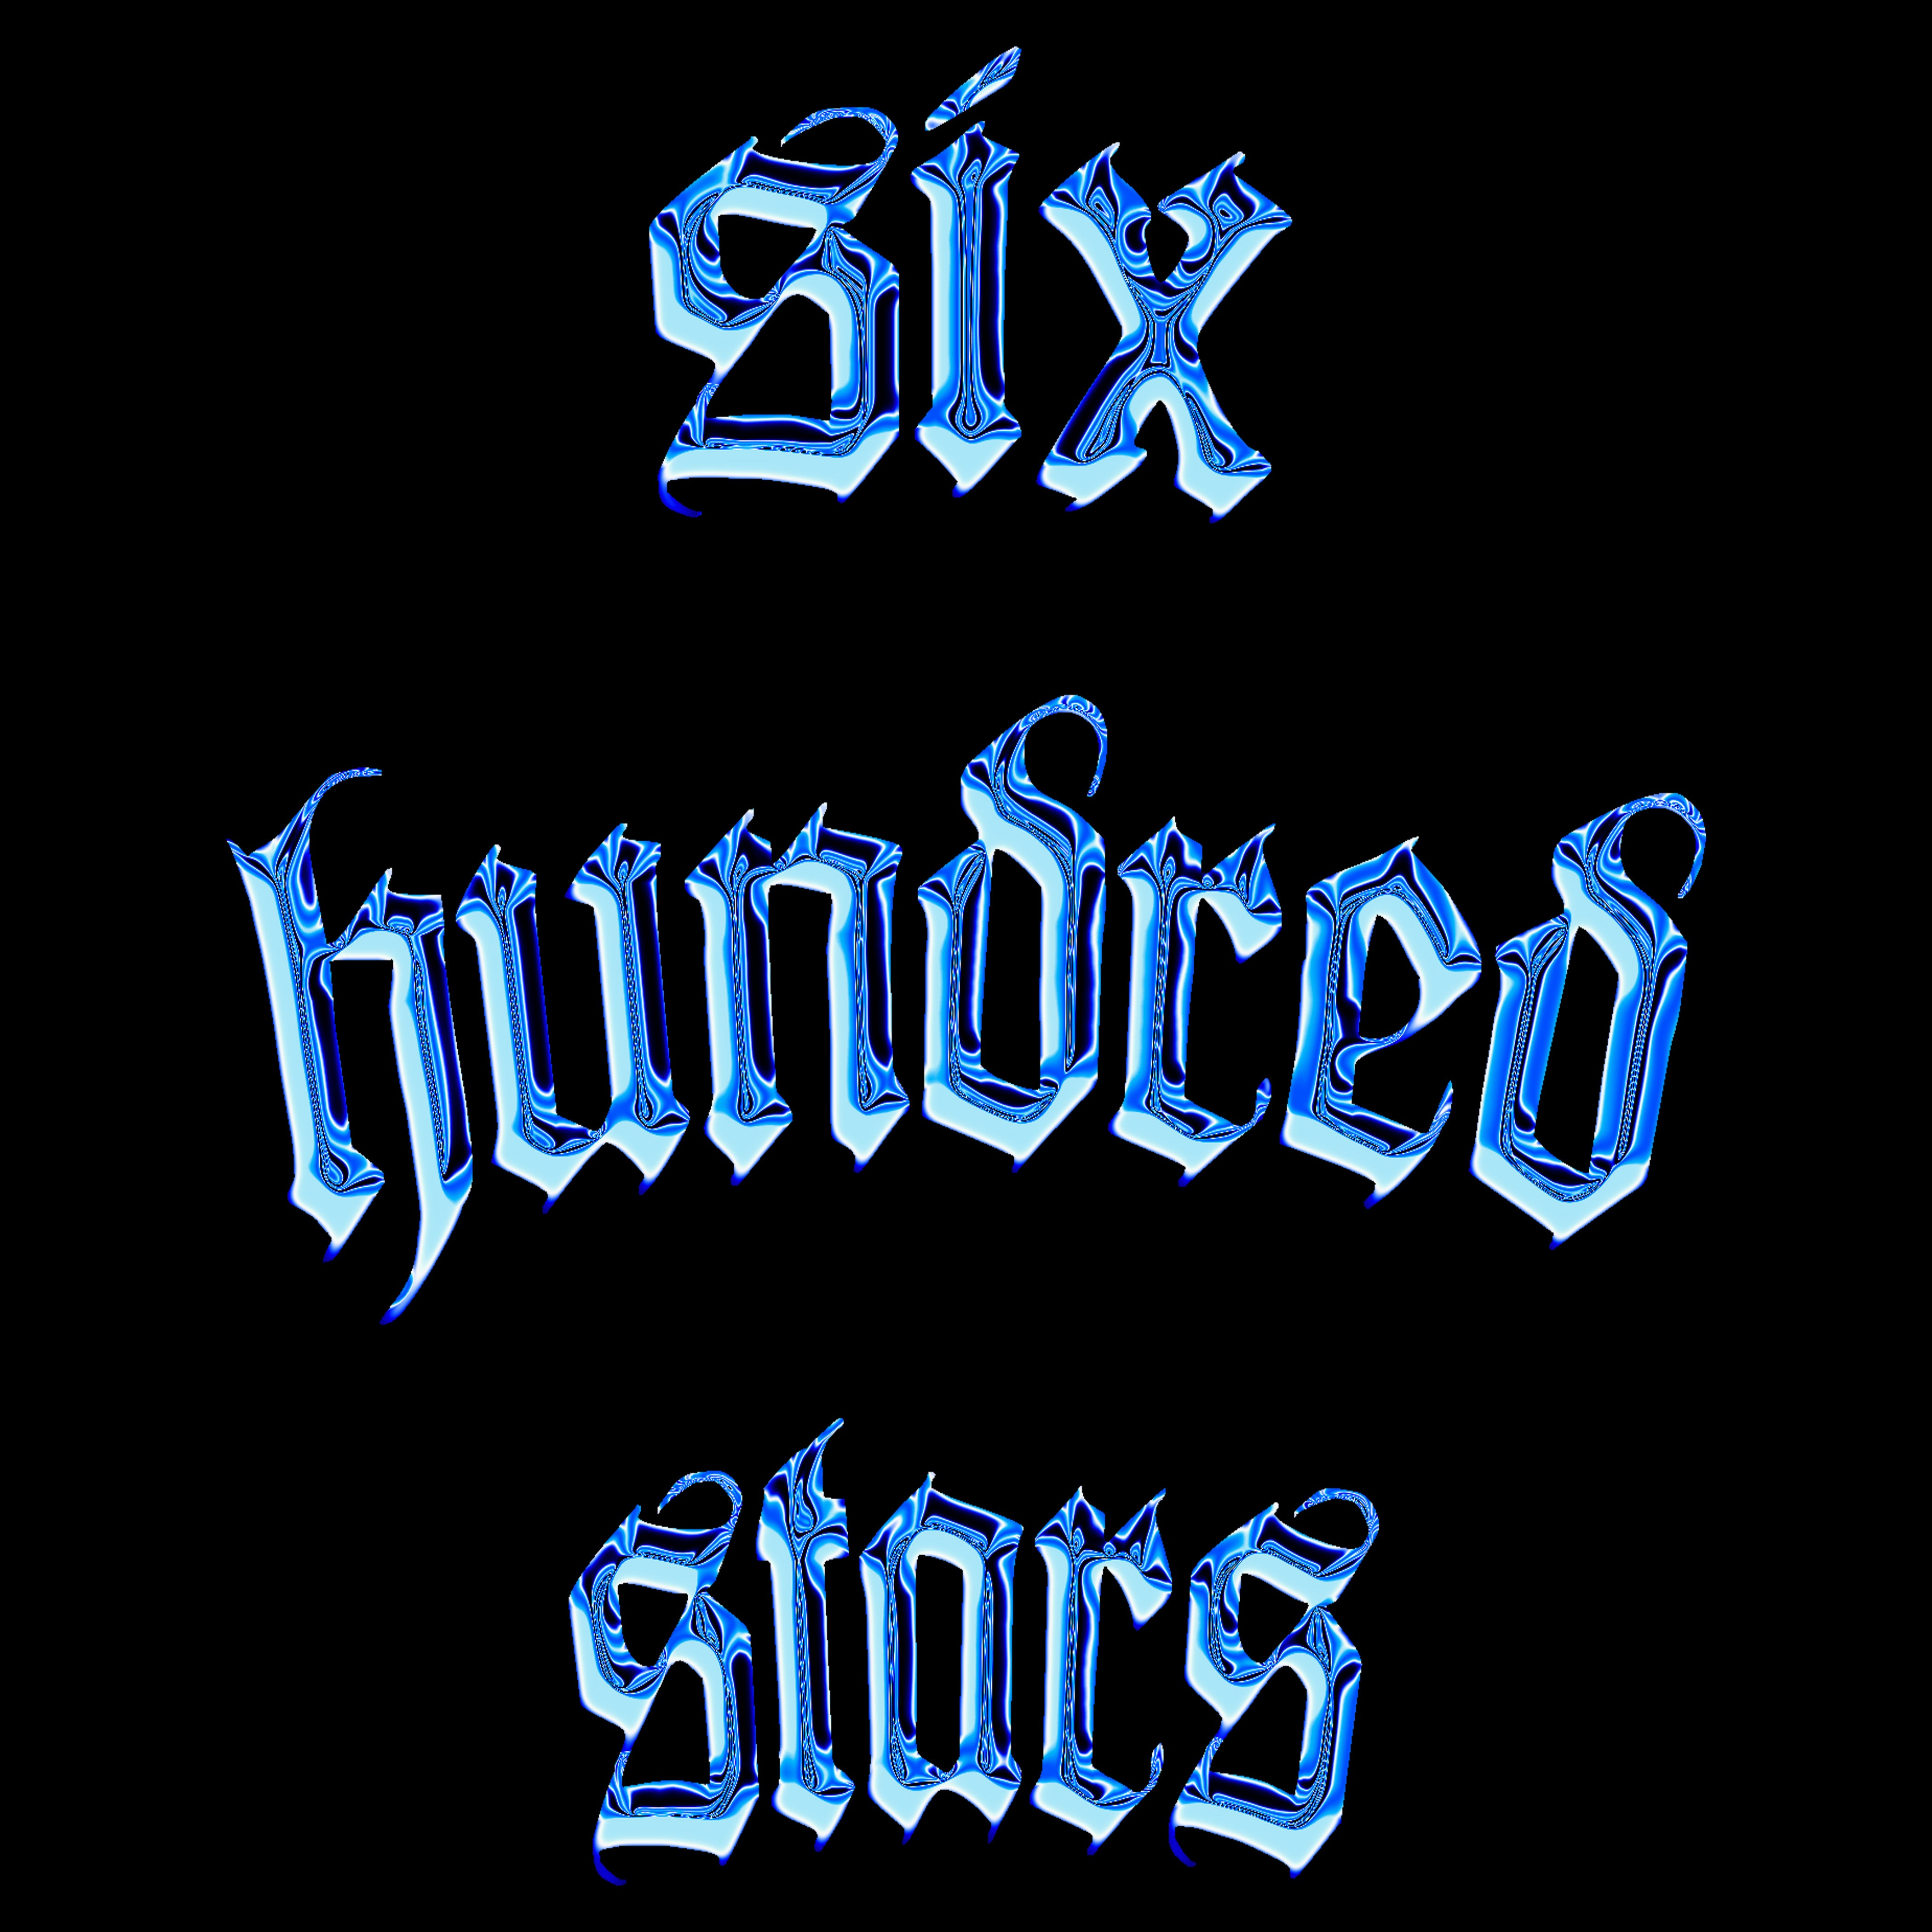 Six Hundred Stars